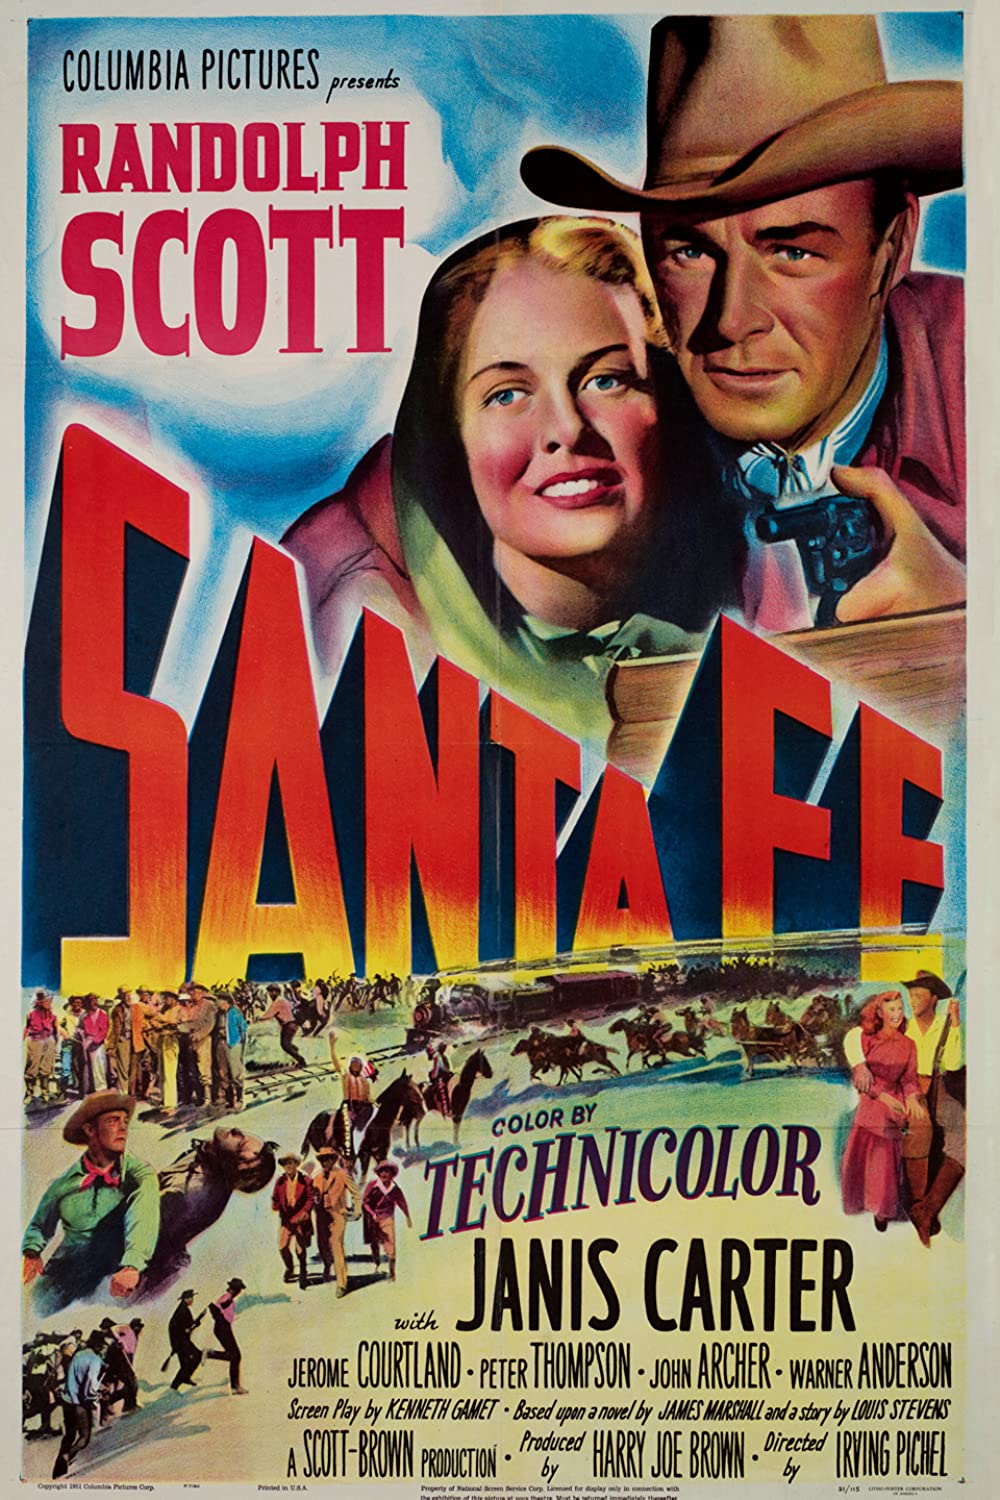 Filmbeschreibung zu Santa Fe